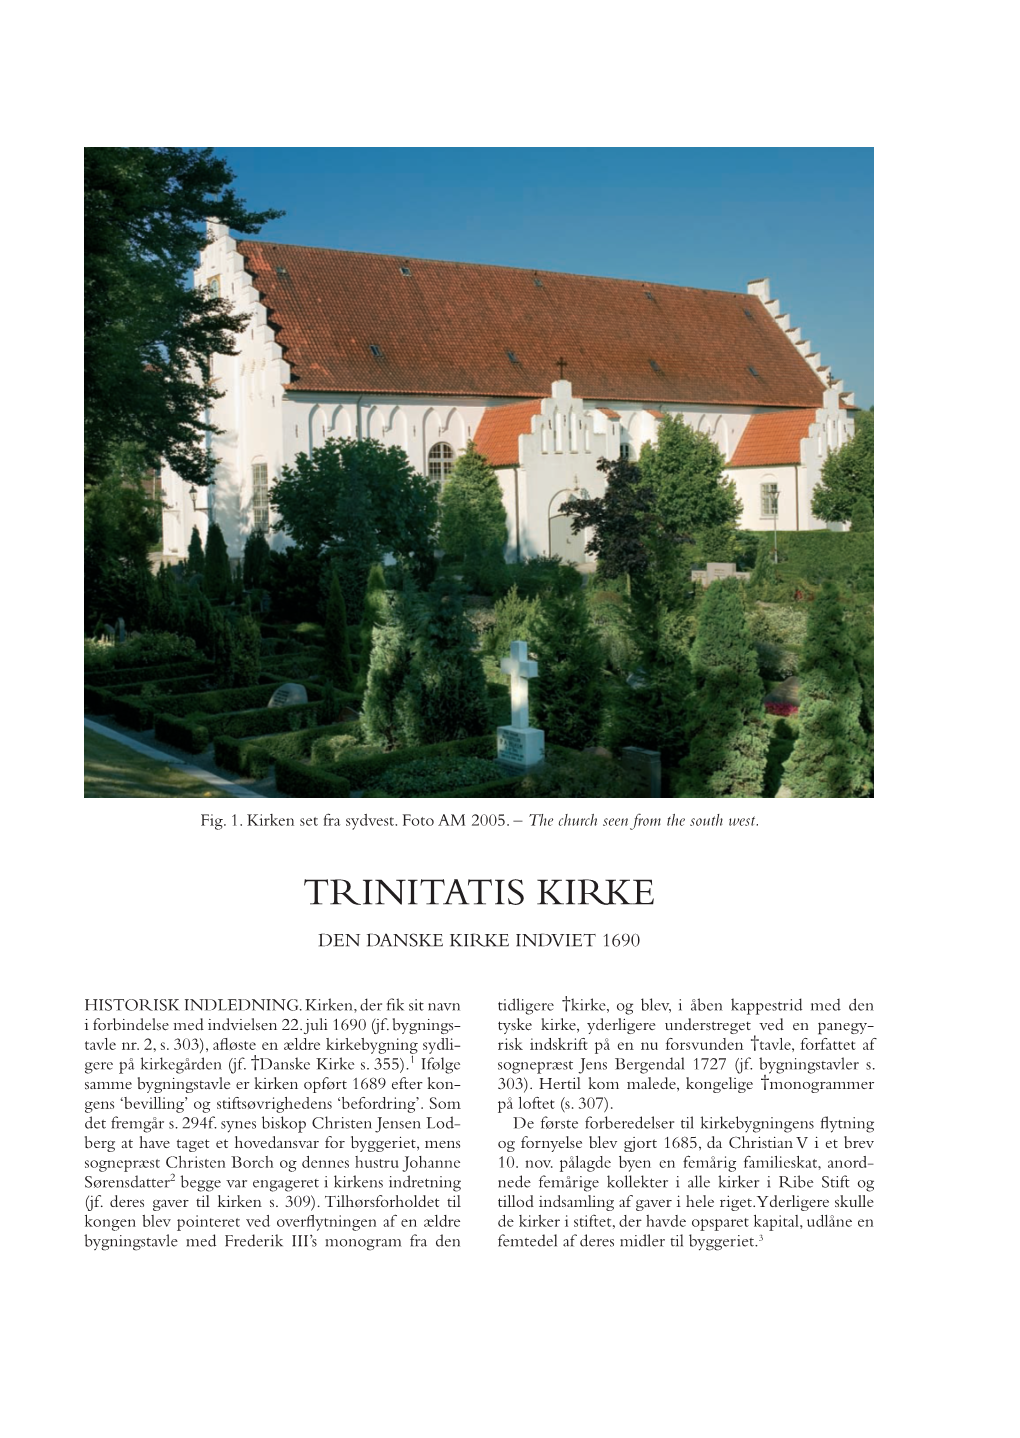 Trinitatis Kirke Den Danske Kirke Indviet 1690